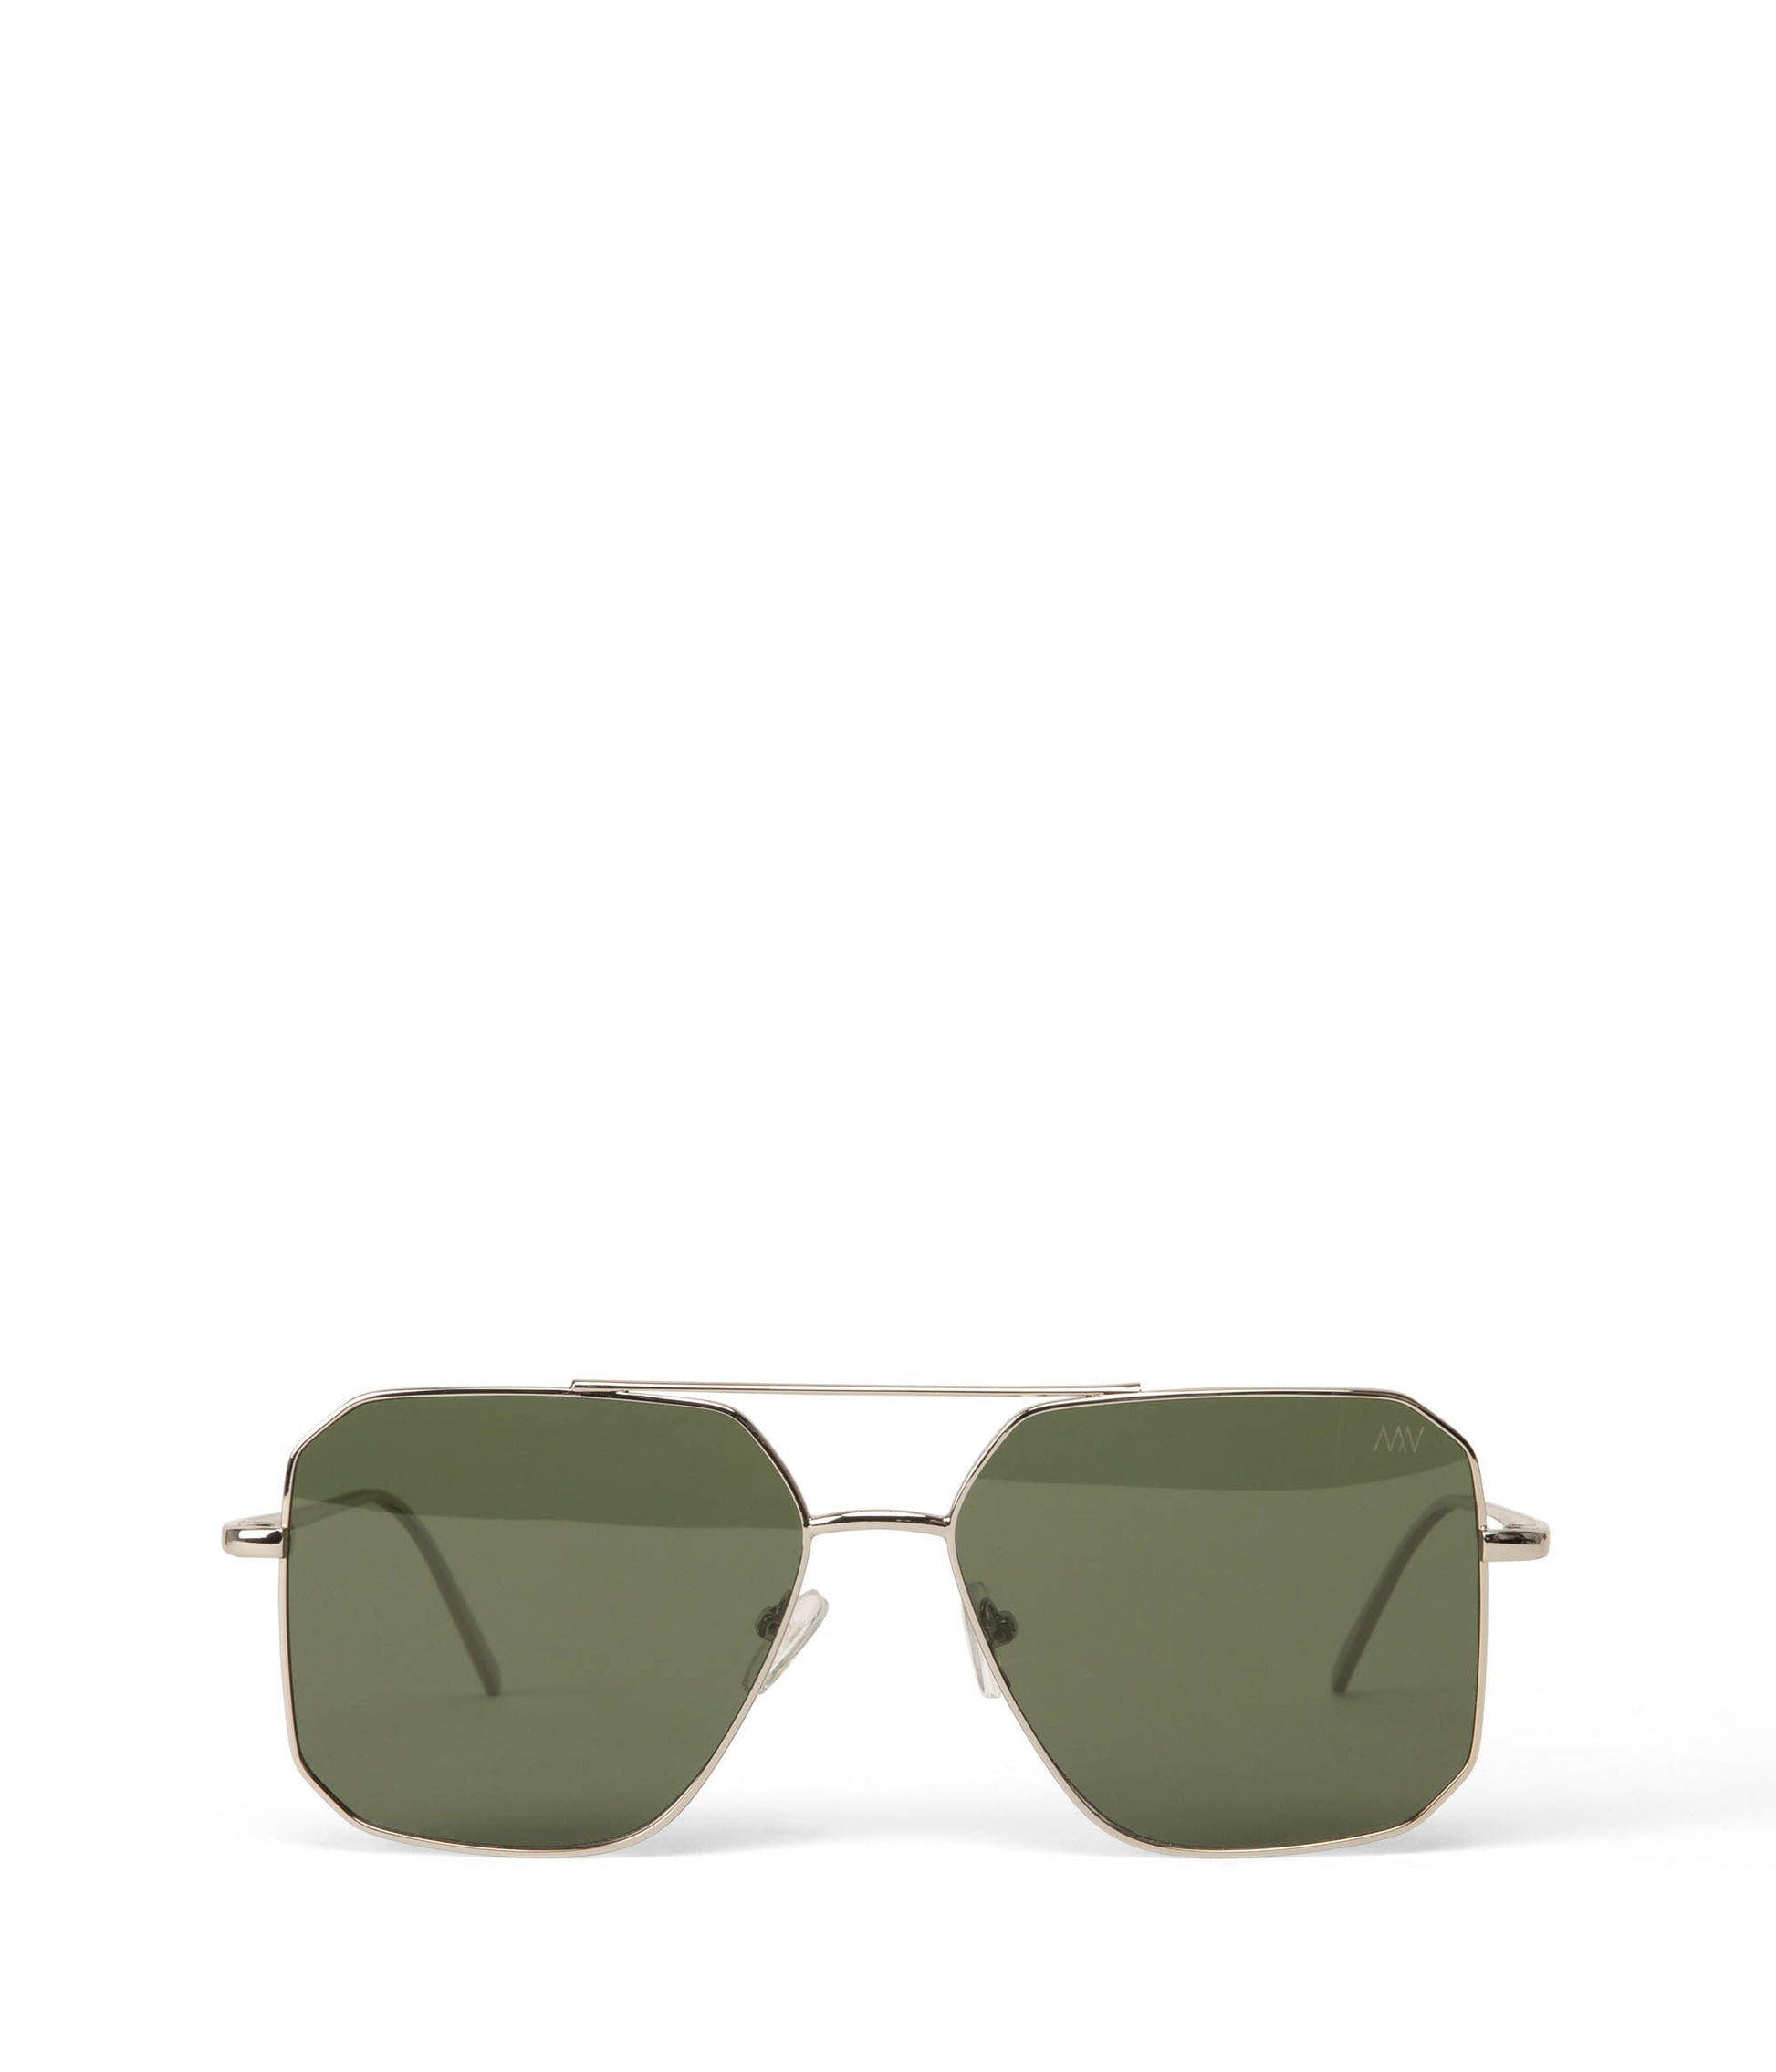 variant:: argent -- izan sunglasses argent